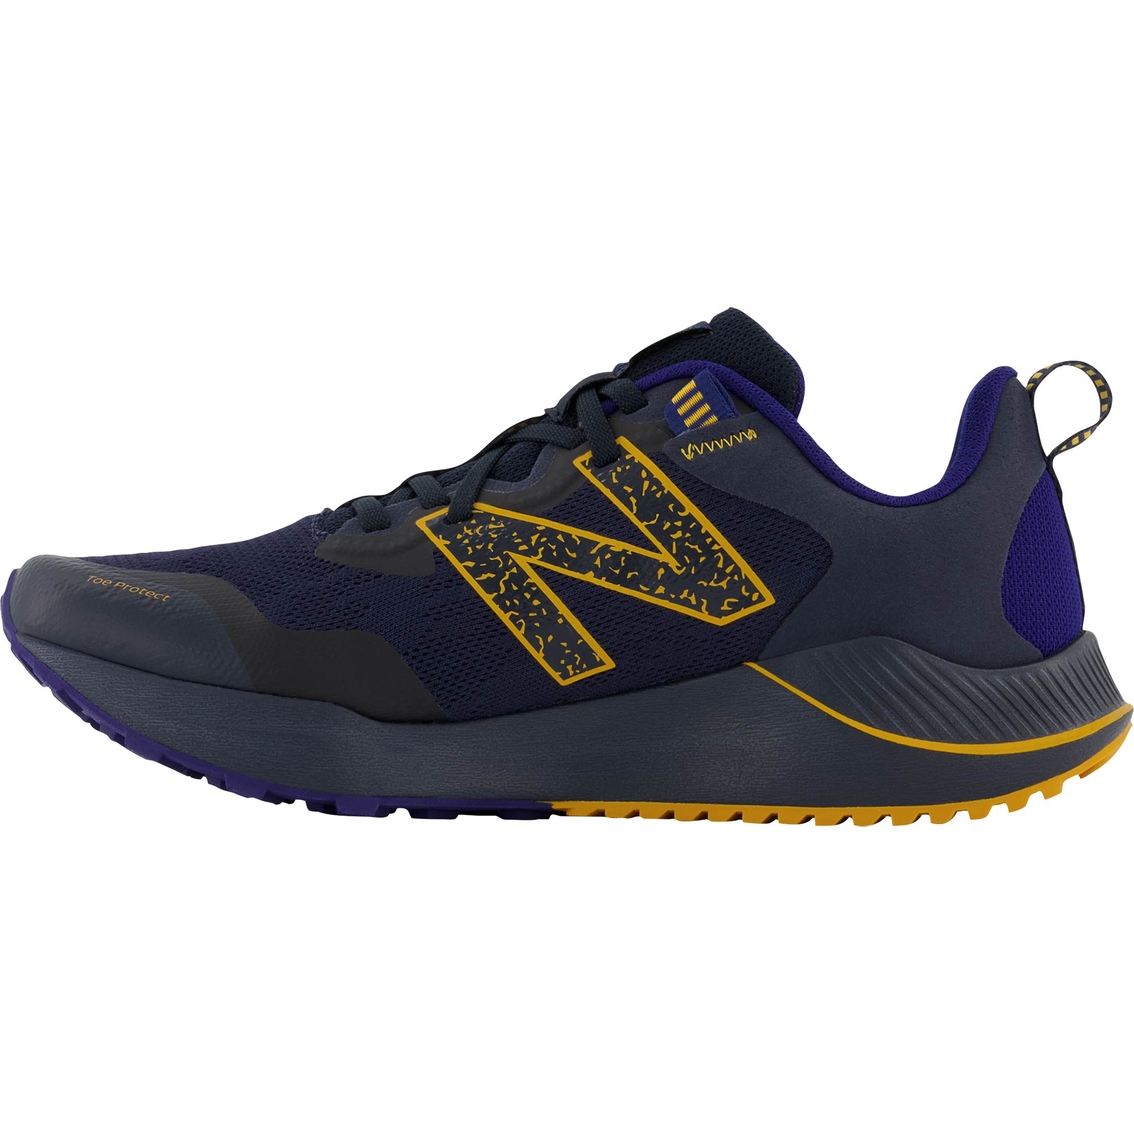 New Balance Men's Mtntrcl4 Running Shoes | Men's Athletic Shoes | Shoes ...